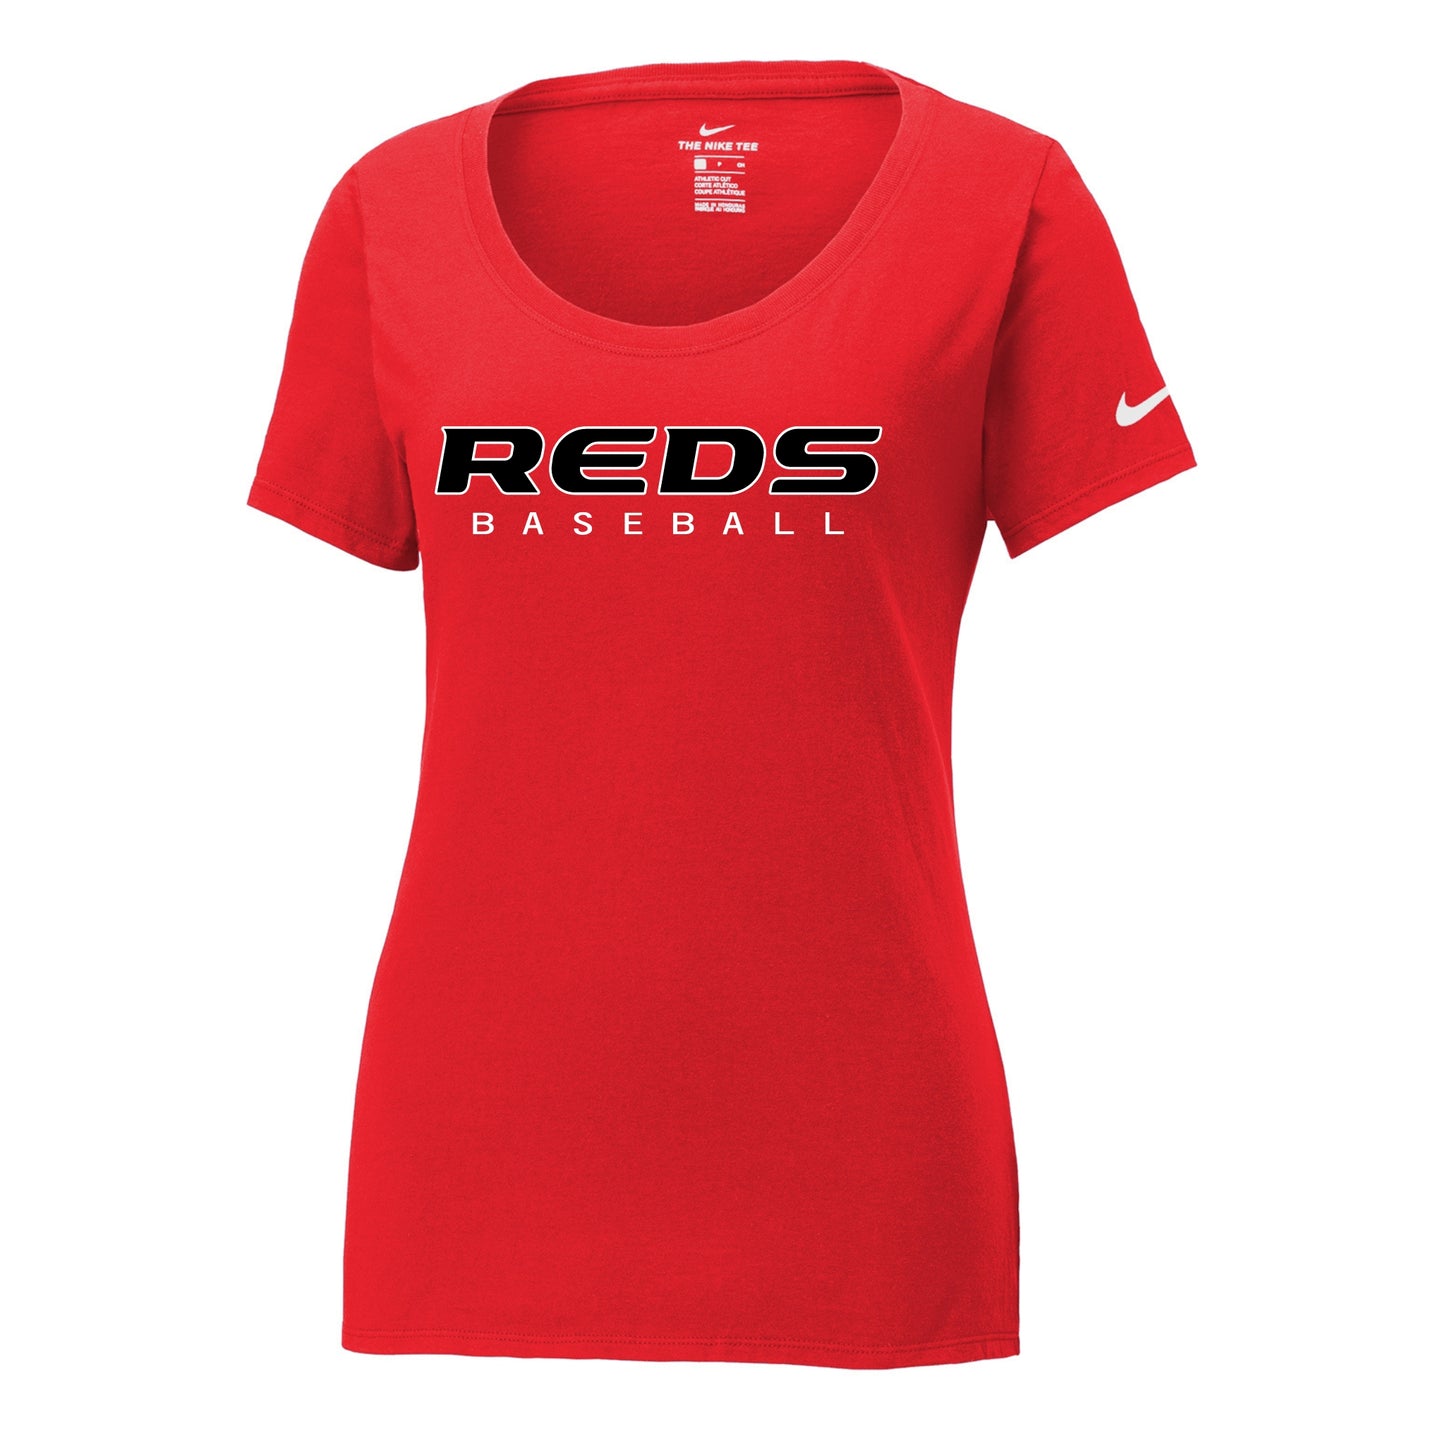 Reds Baseball Nike Women's Cotton/Poly Tee